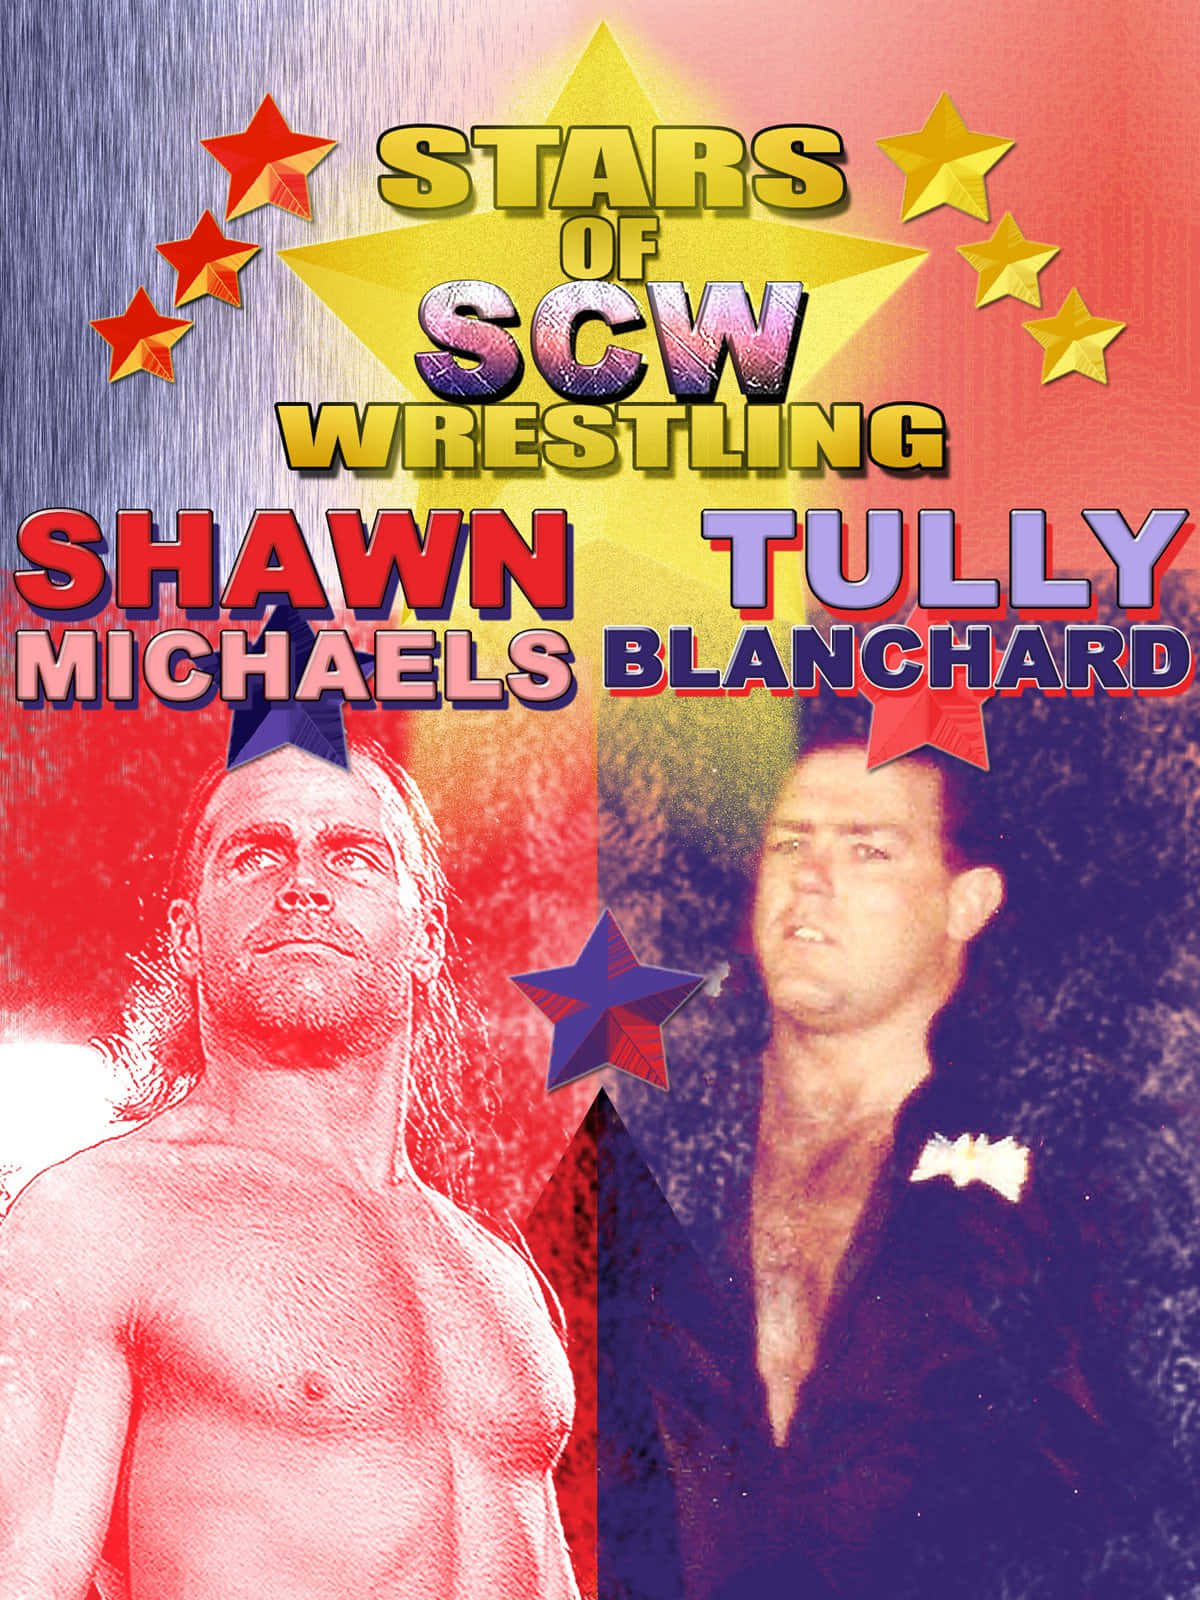 SCW Vintage Pro Wrestling Tully Blanchard Poster Wallpaper